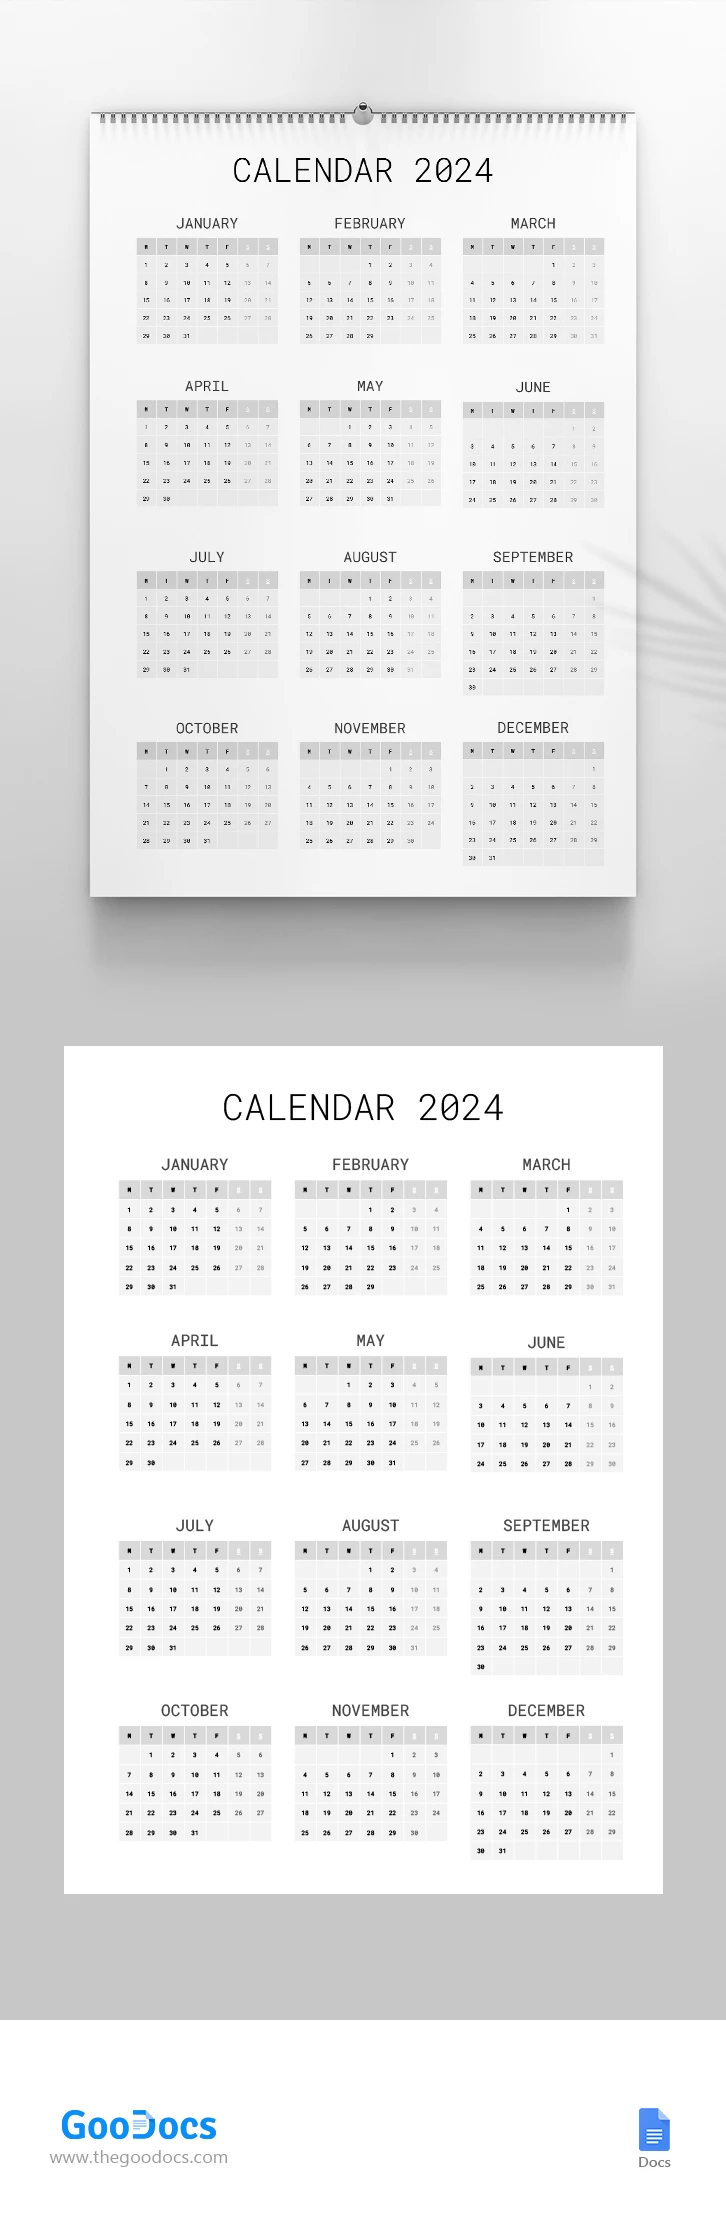 Yearly Calendar 2024 - free Google Docs Template - 10068199